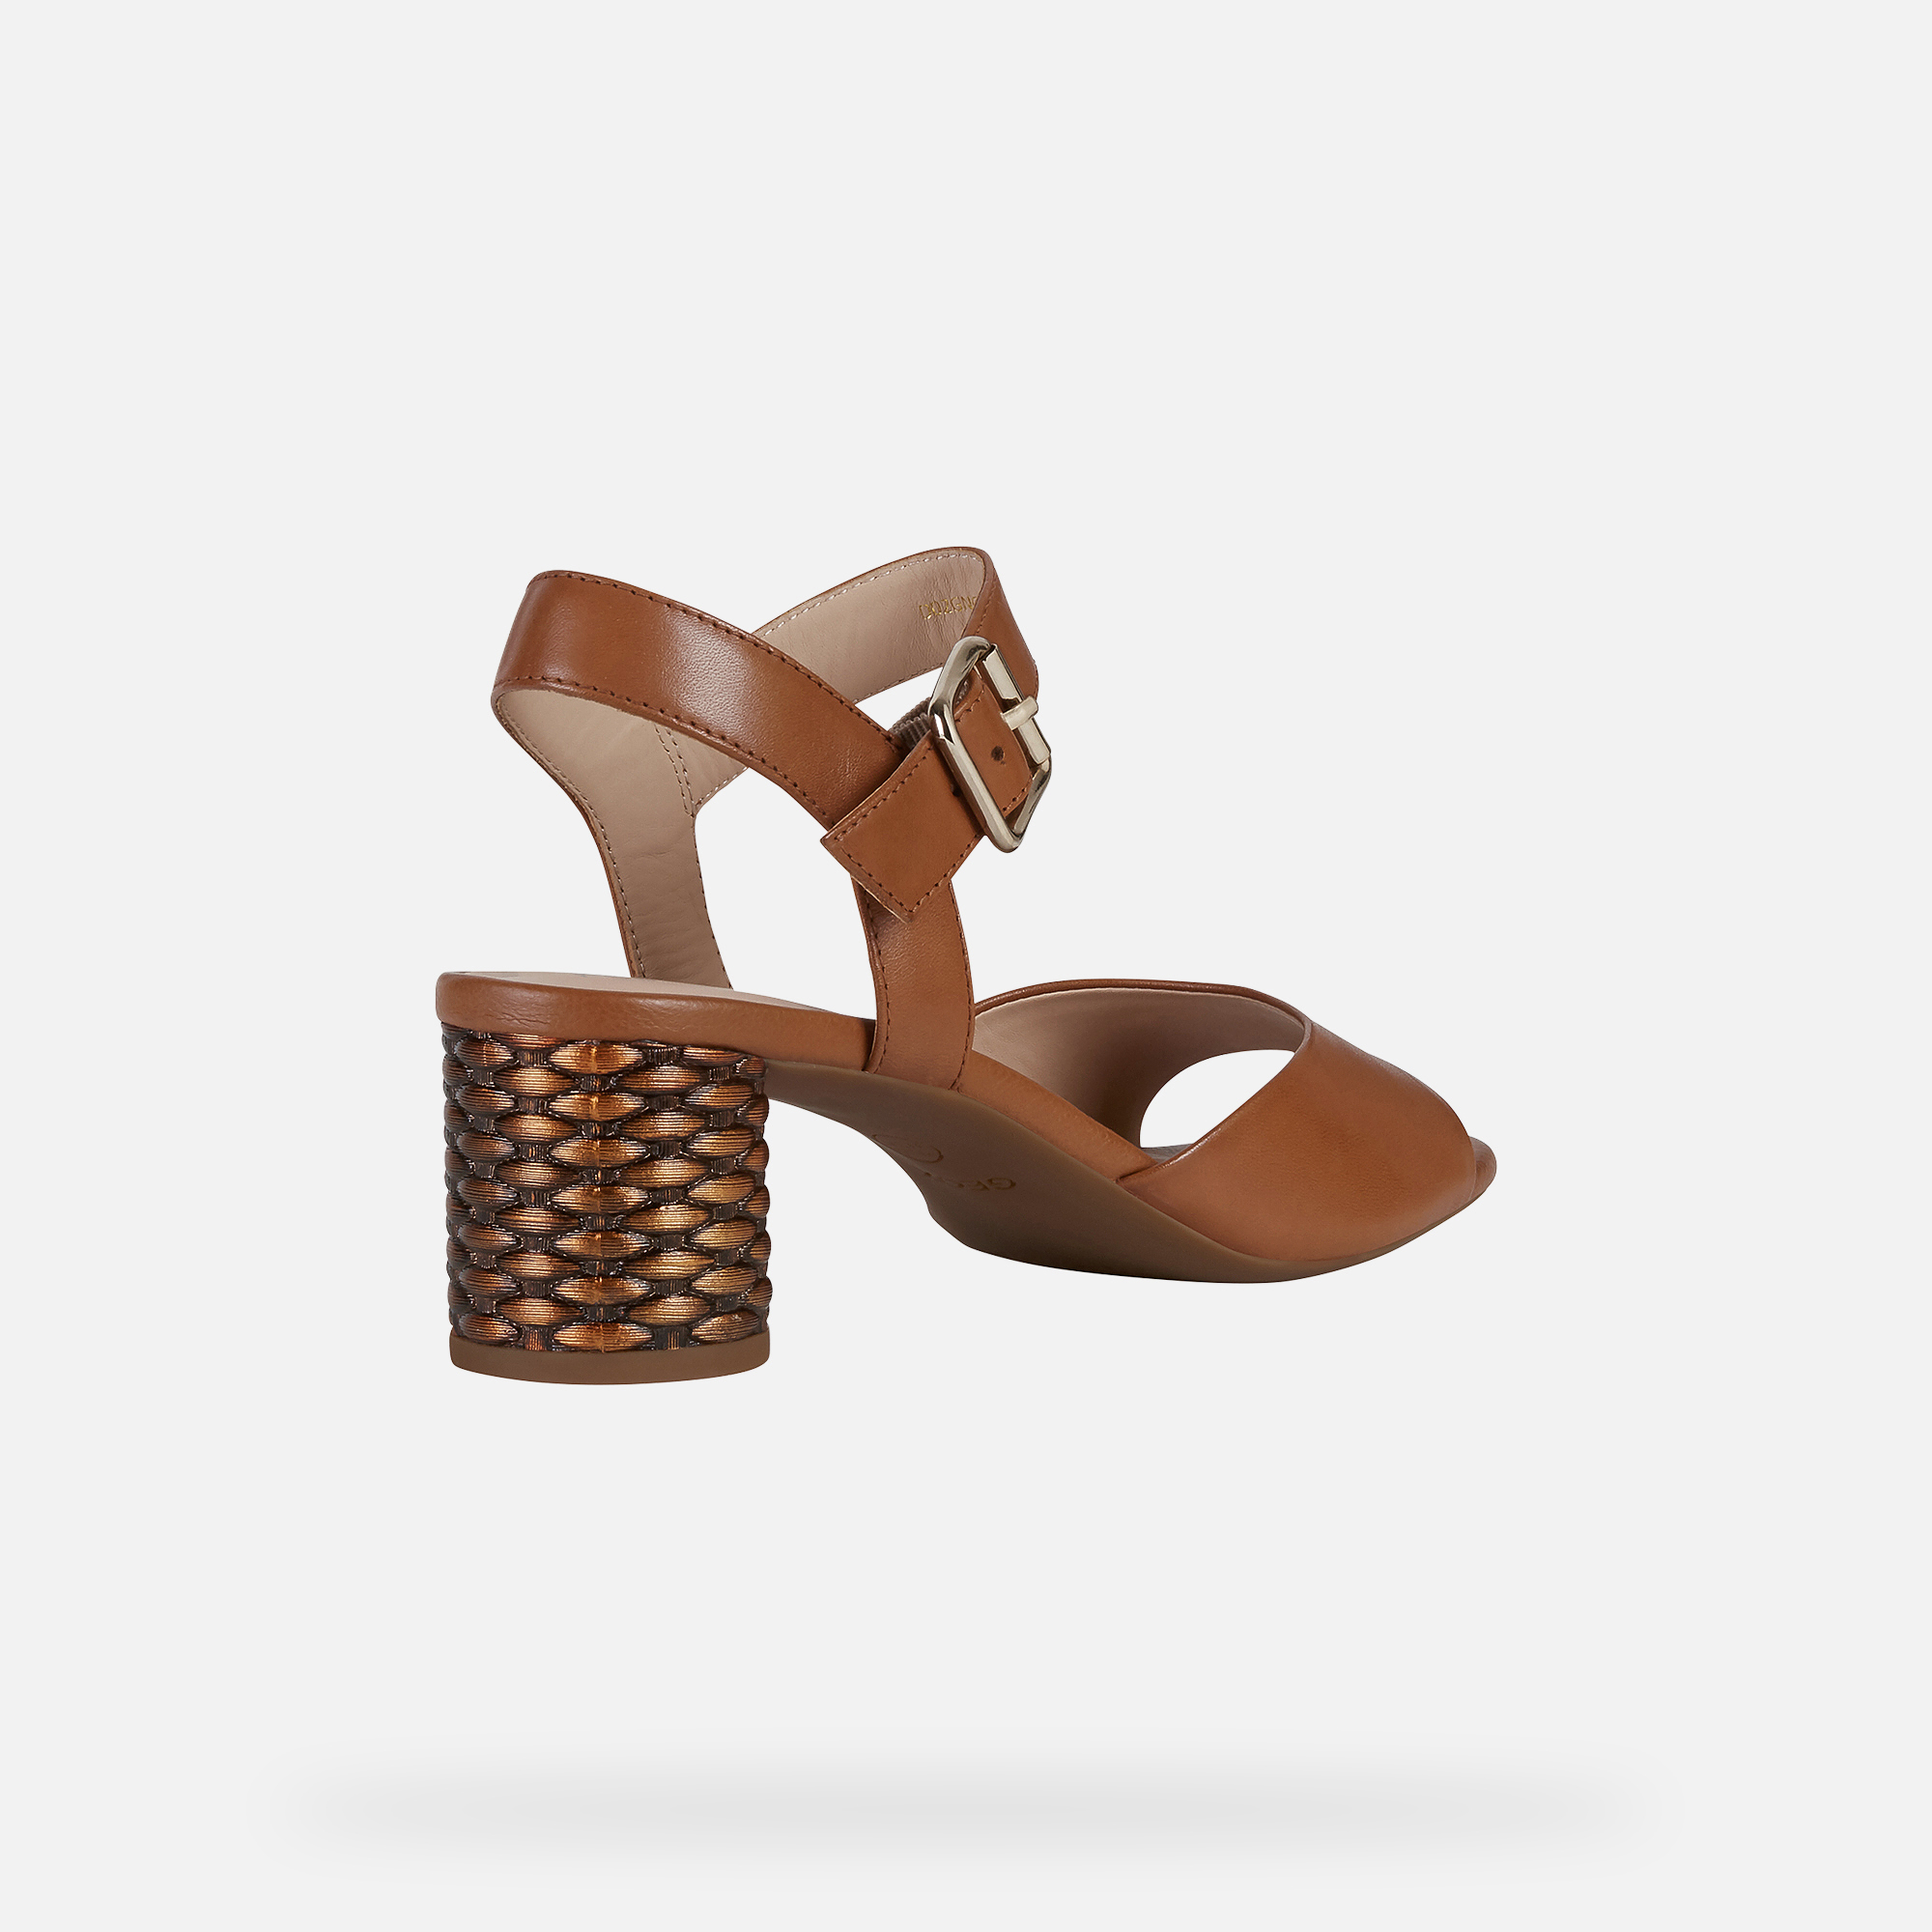 Geox ORTENSIA Woman Sandals | Geox ® SS 20